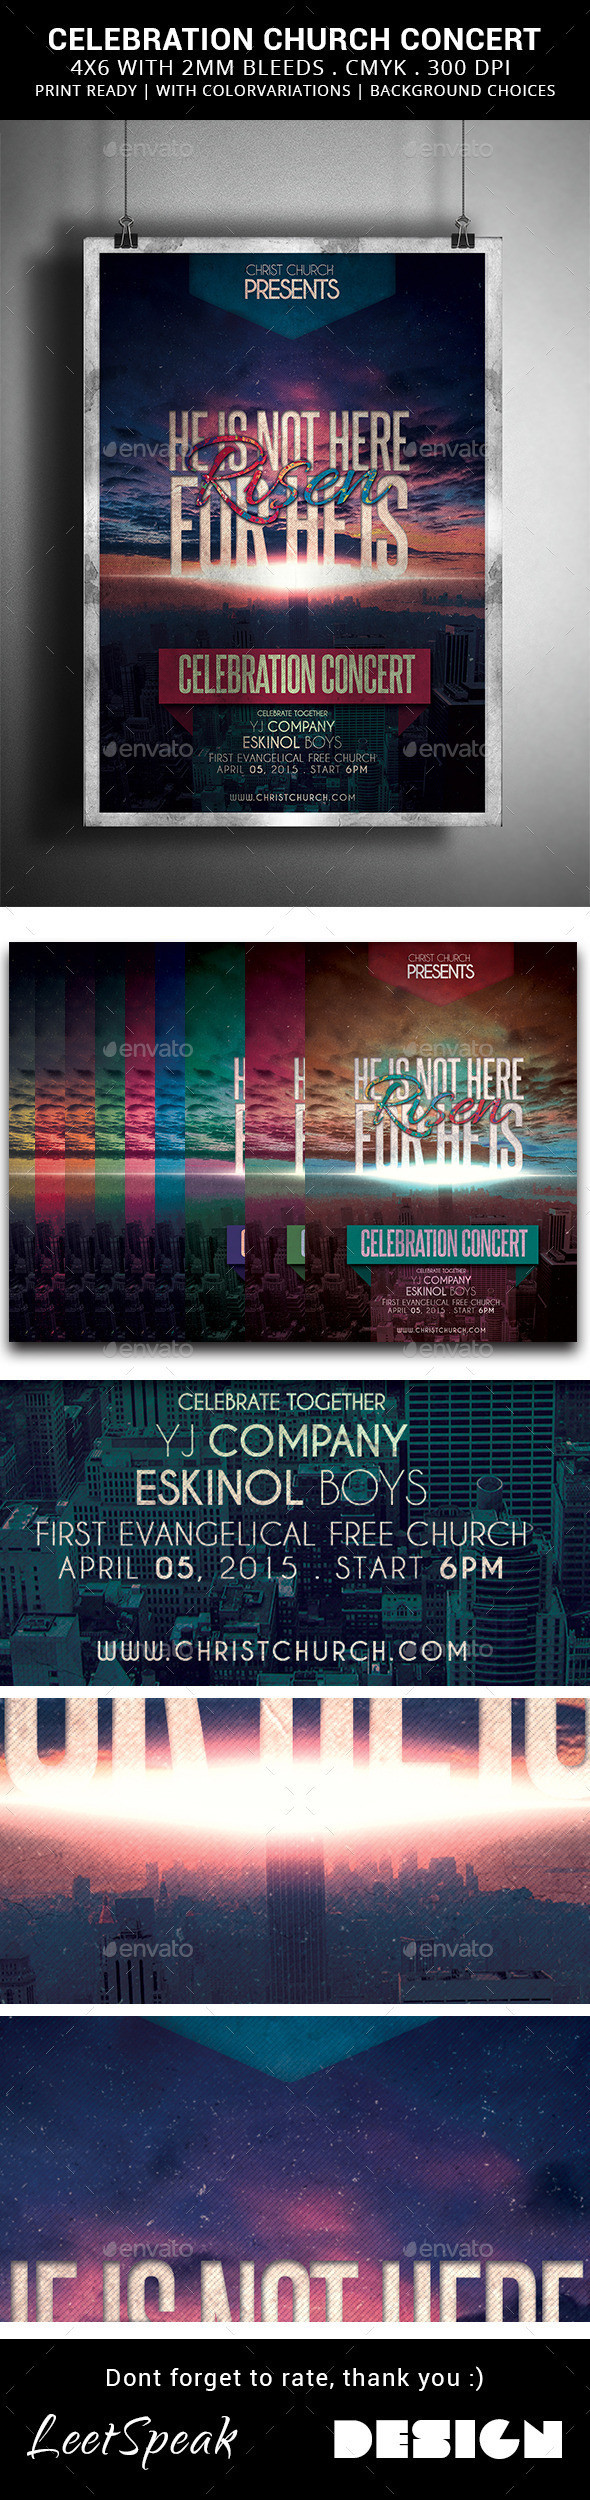 Risen celebration church concert preview